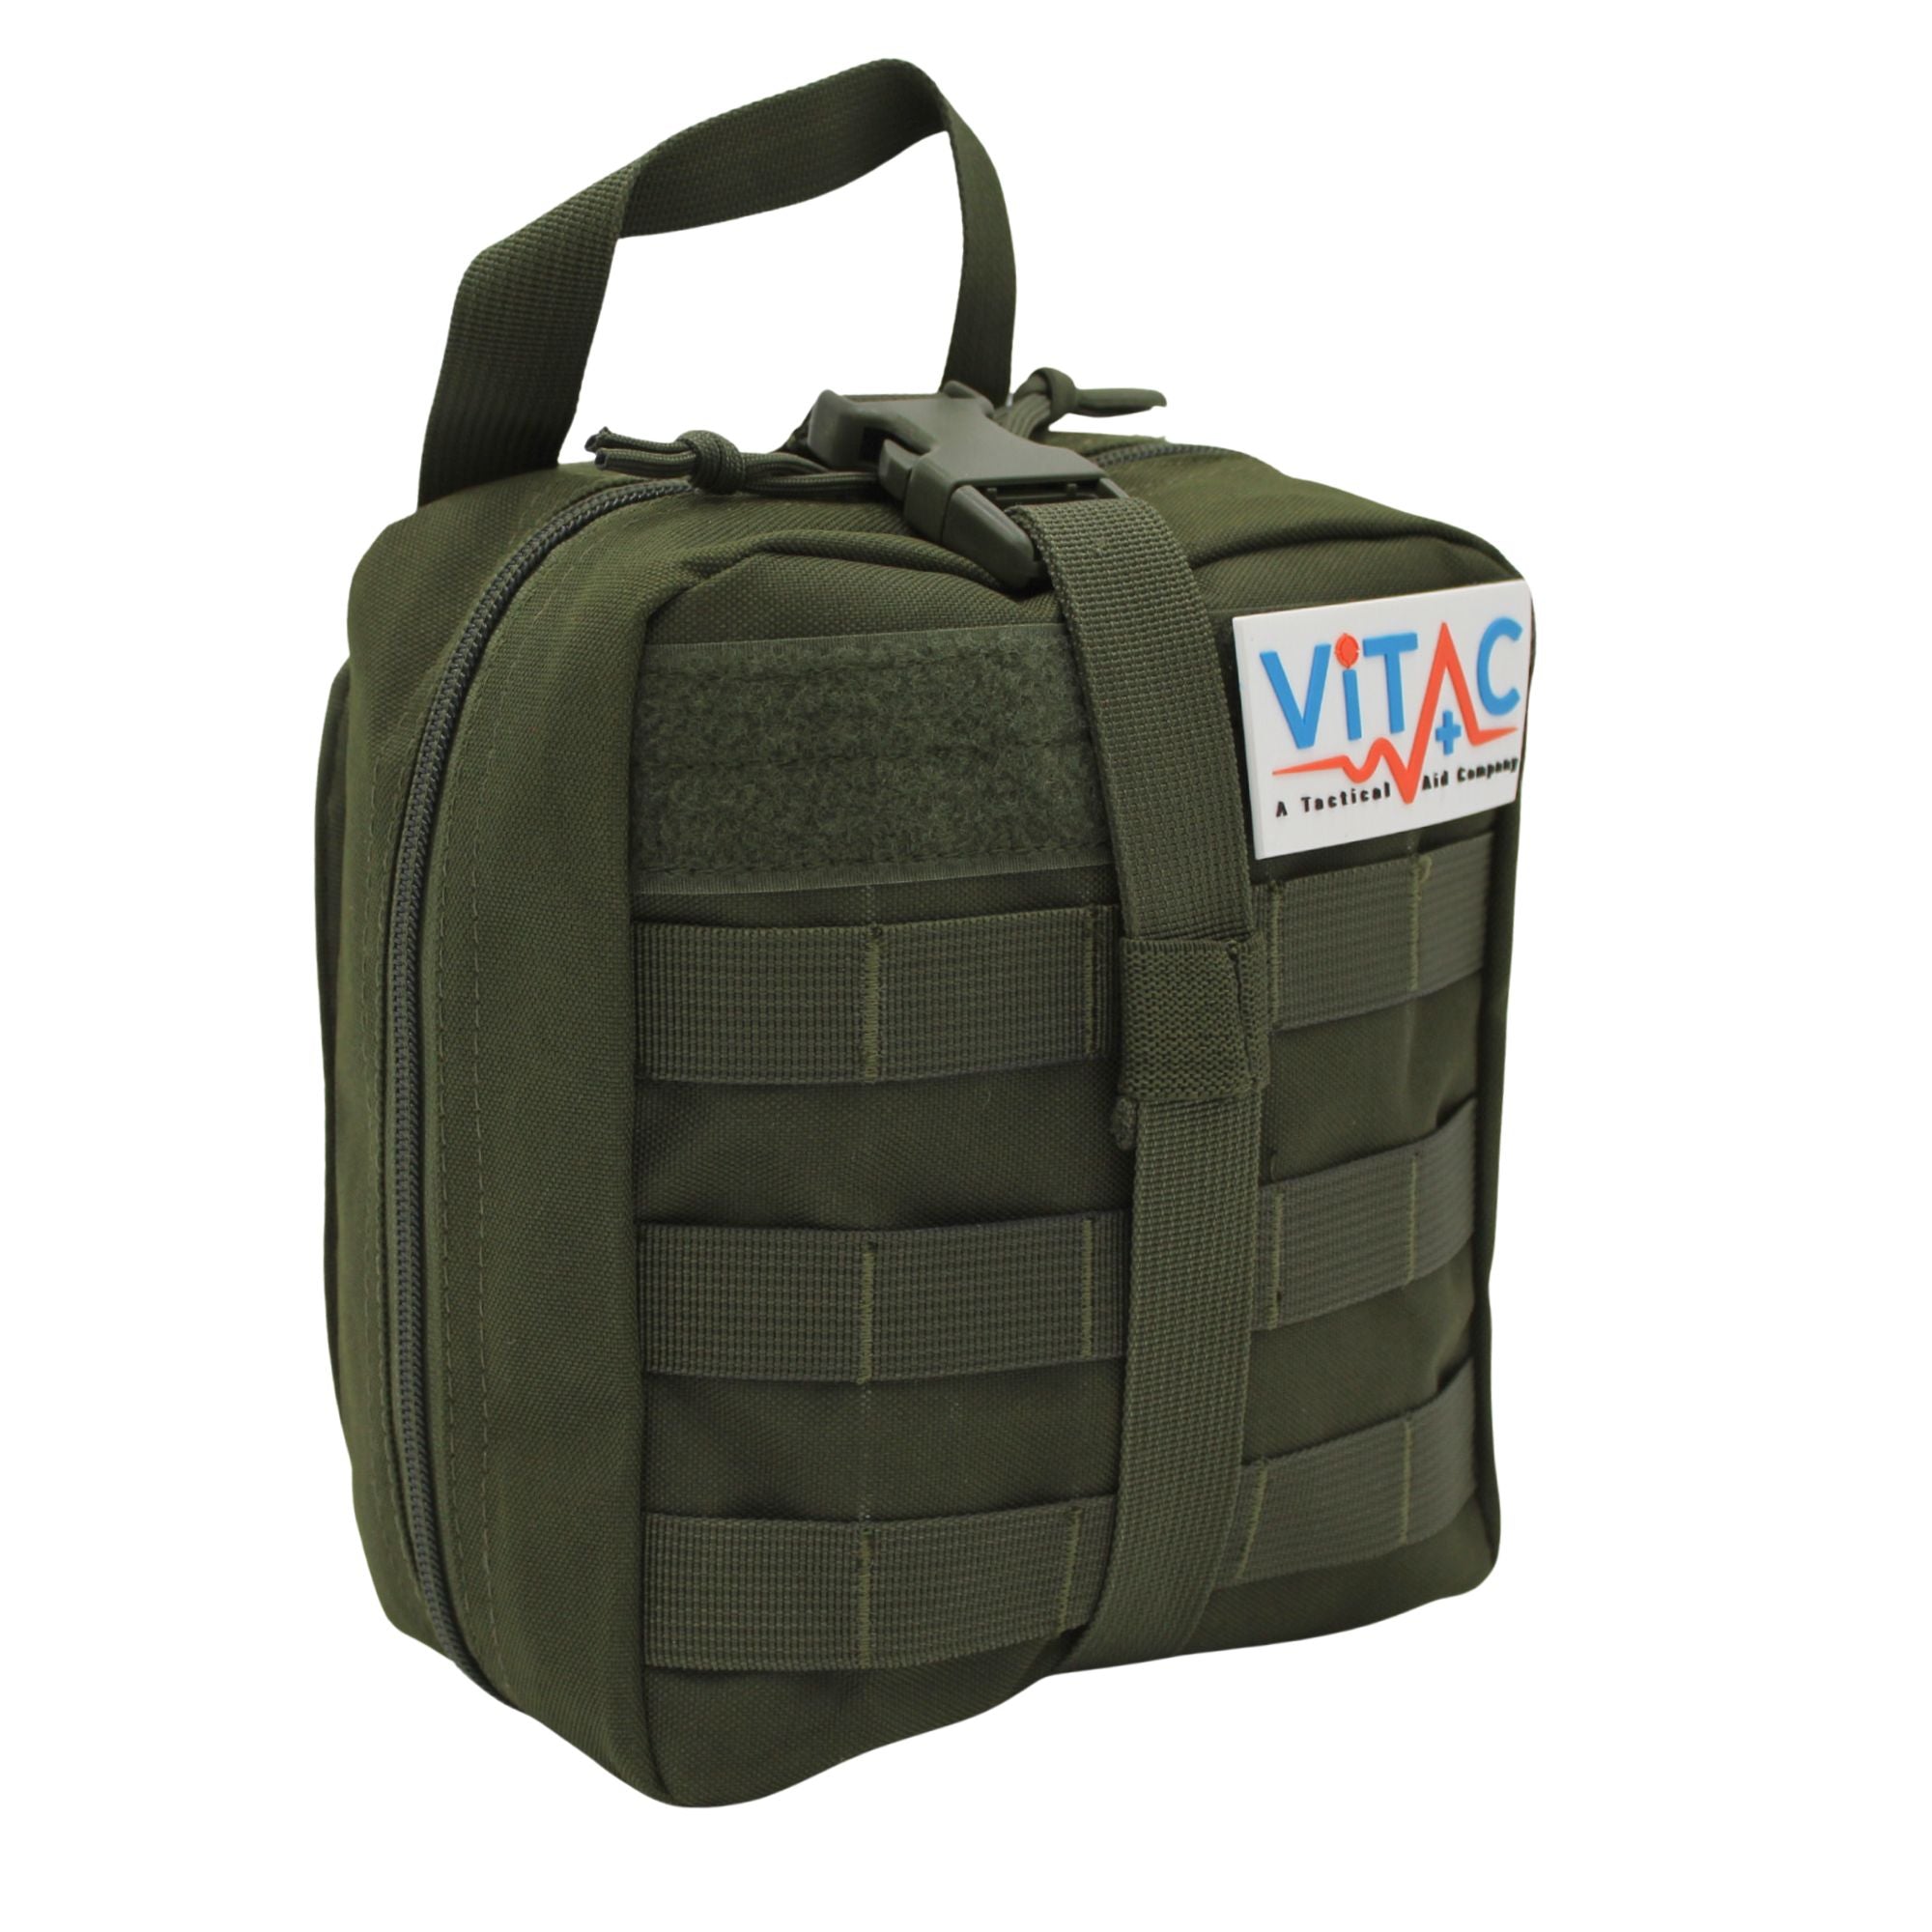 ViTAC Vehicle Plus Trauma Kit Emergency Survival Kit Olive Drab